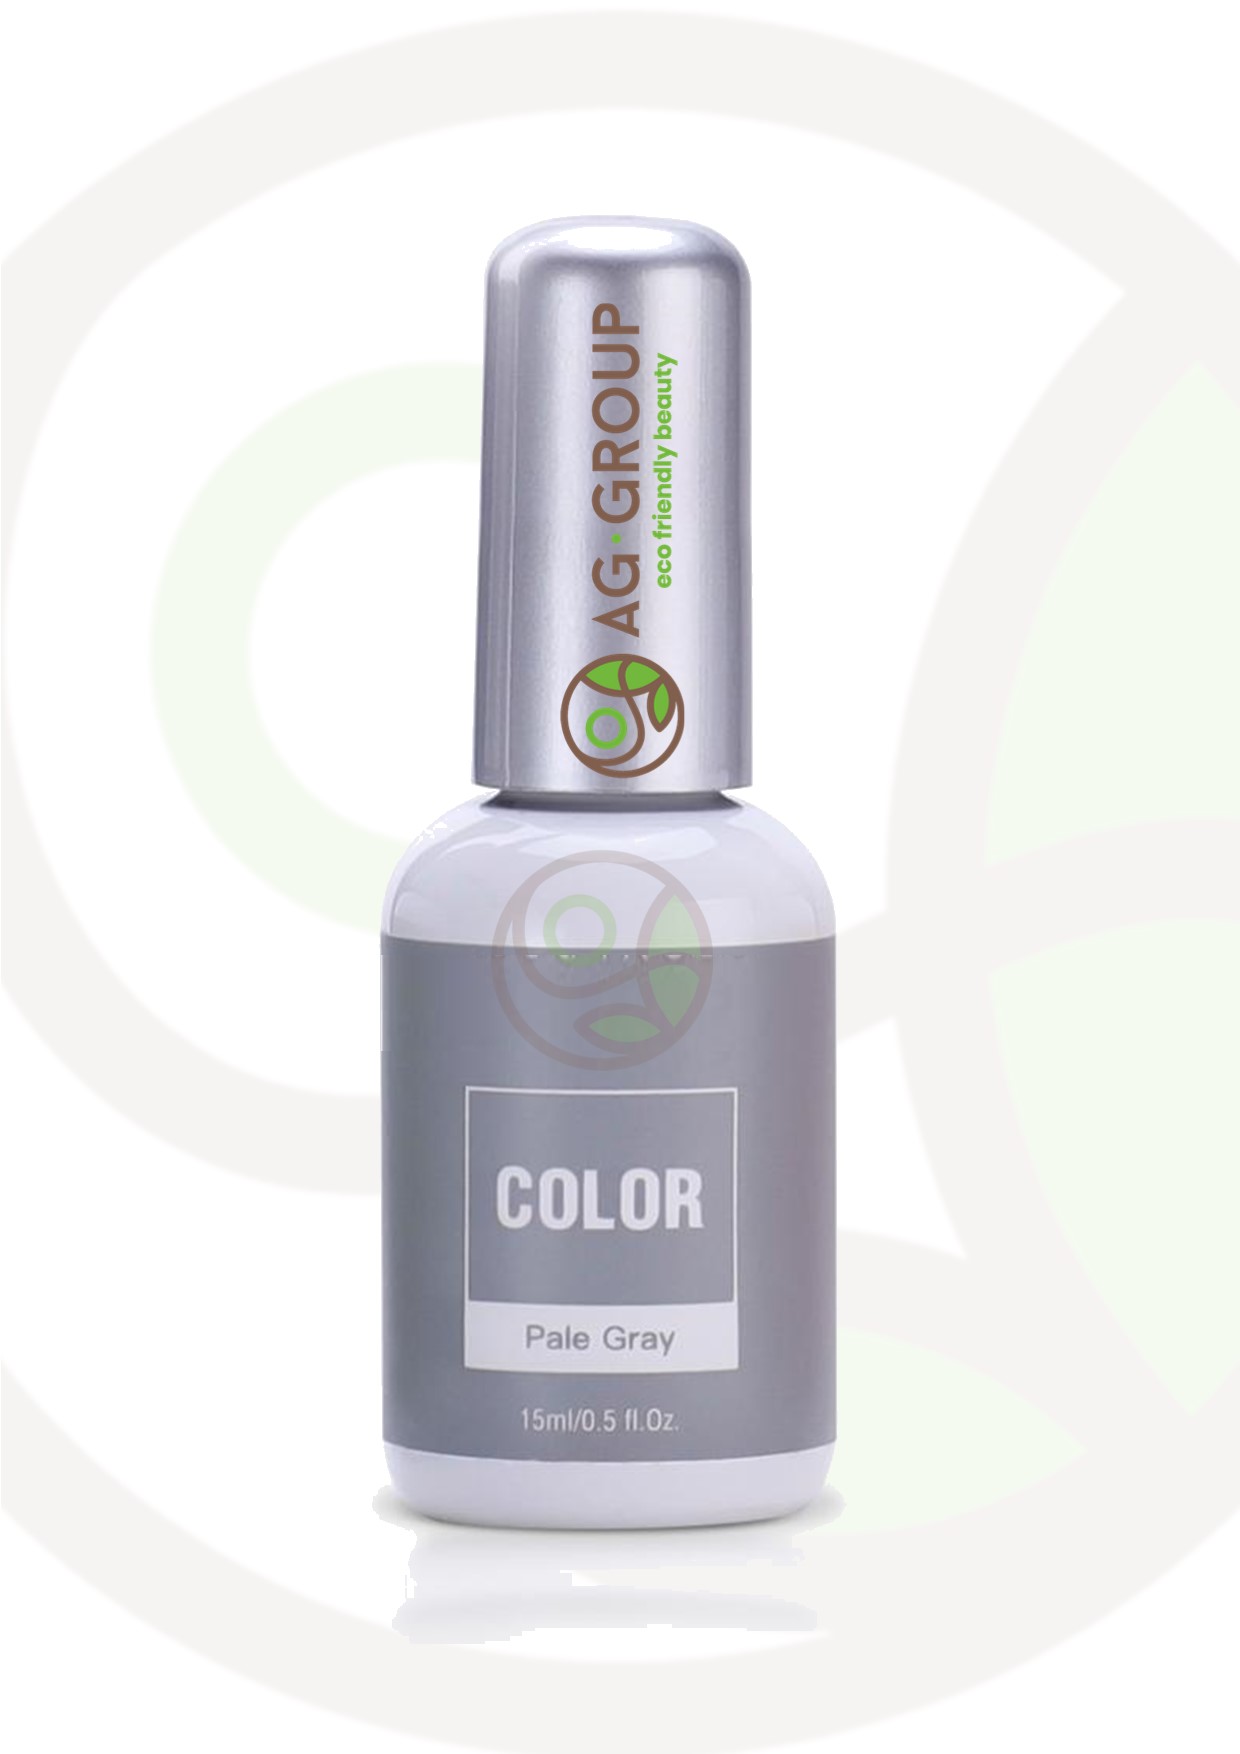 Featured image for “Gel polish soak -off led/uv-pale gray”